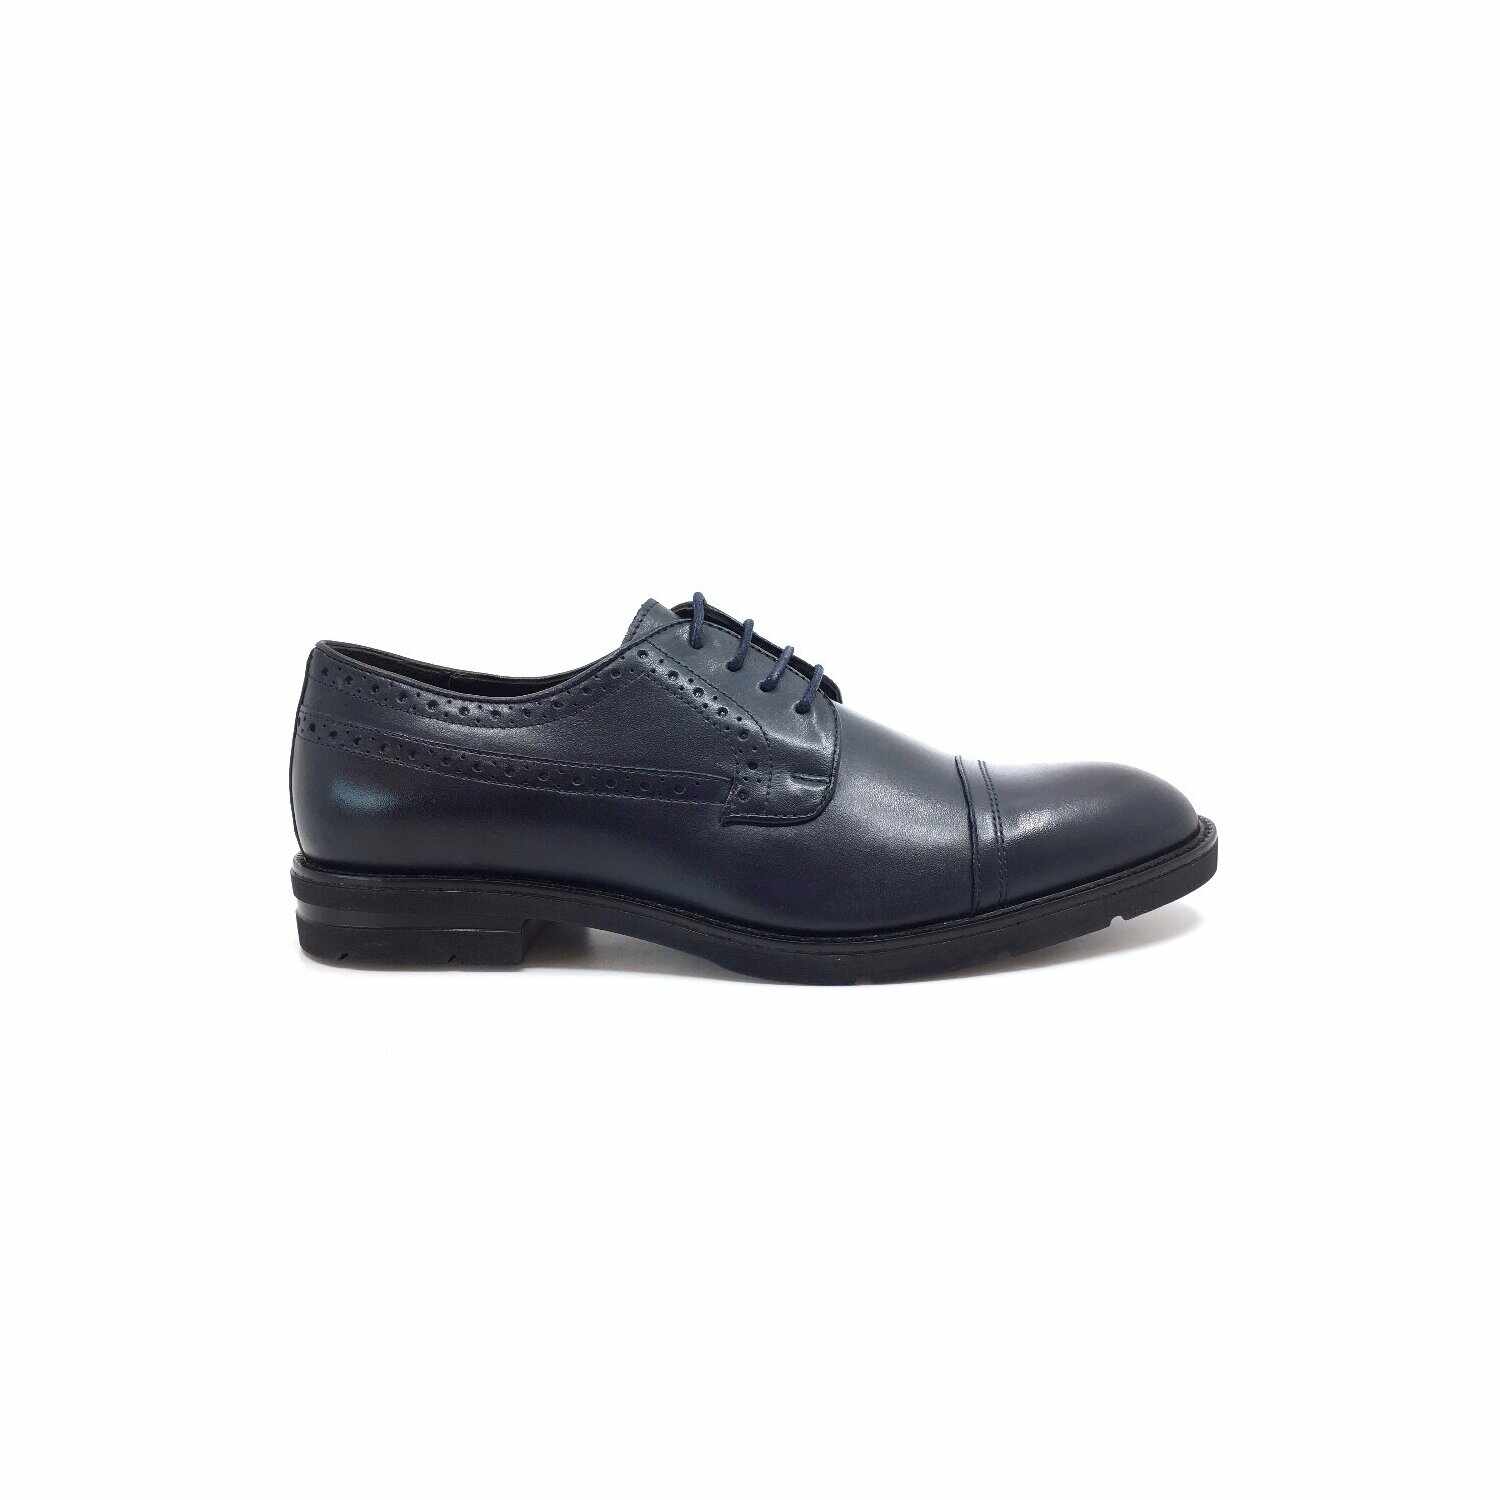 Pantofi casual barbati din piele naturala Leofex - Mostra 930 -1 Blue Box